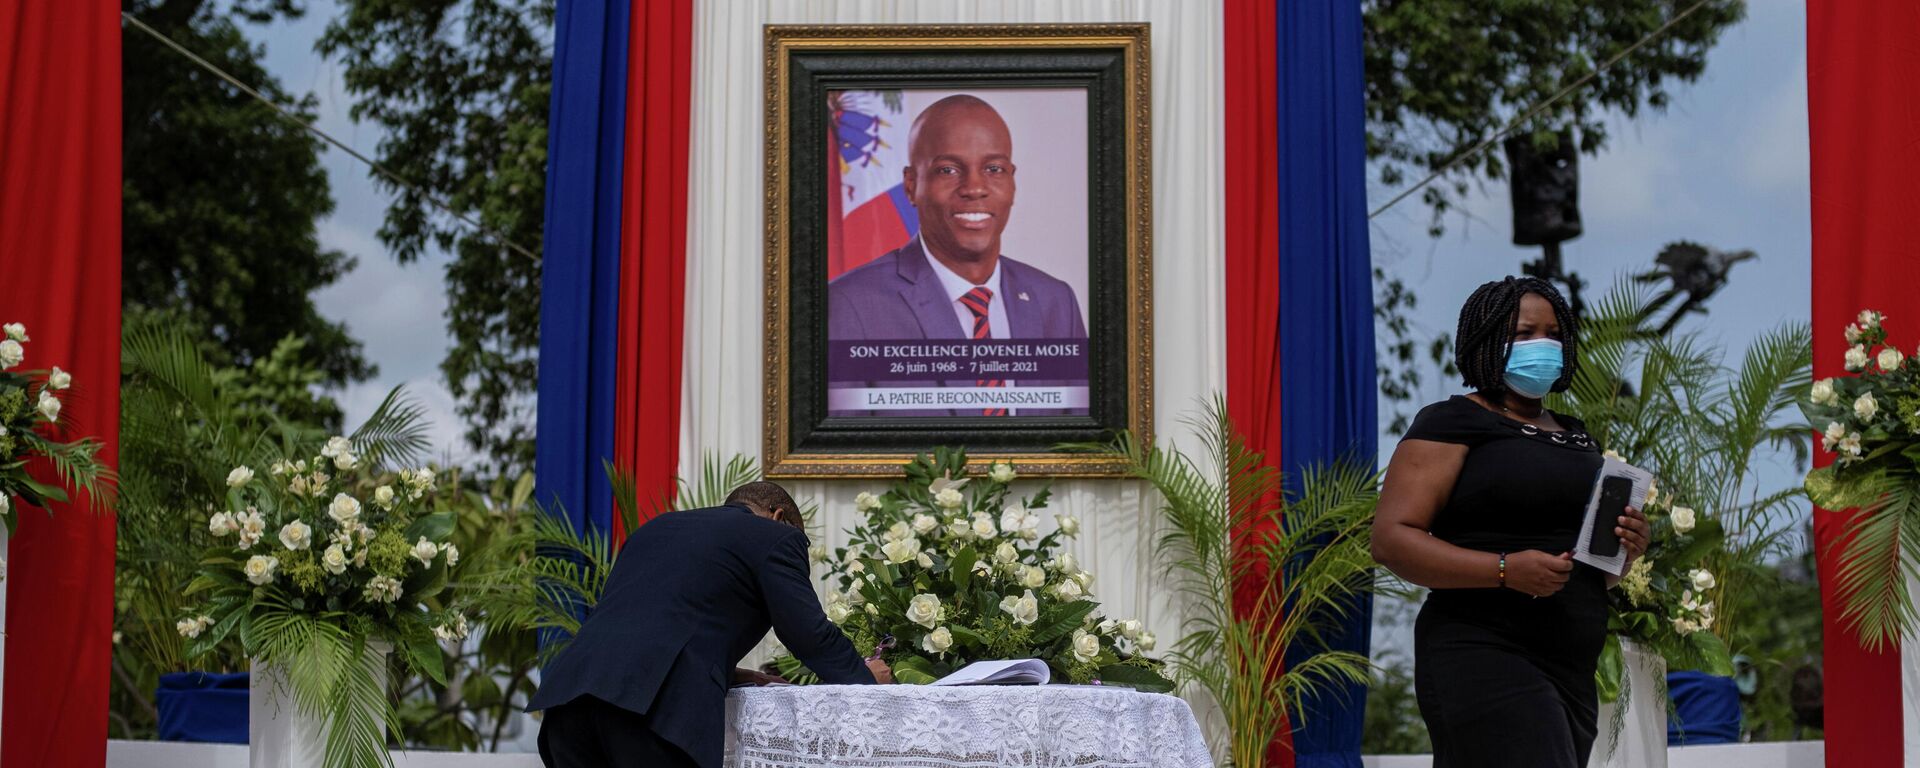 Ceremonioa en honor al expresidente de Haití, Jovenel Moise - Sputnik Mundo, 1920, 13.08.2021